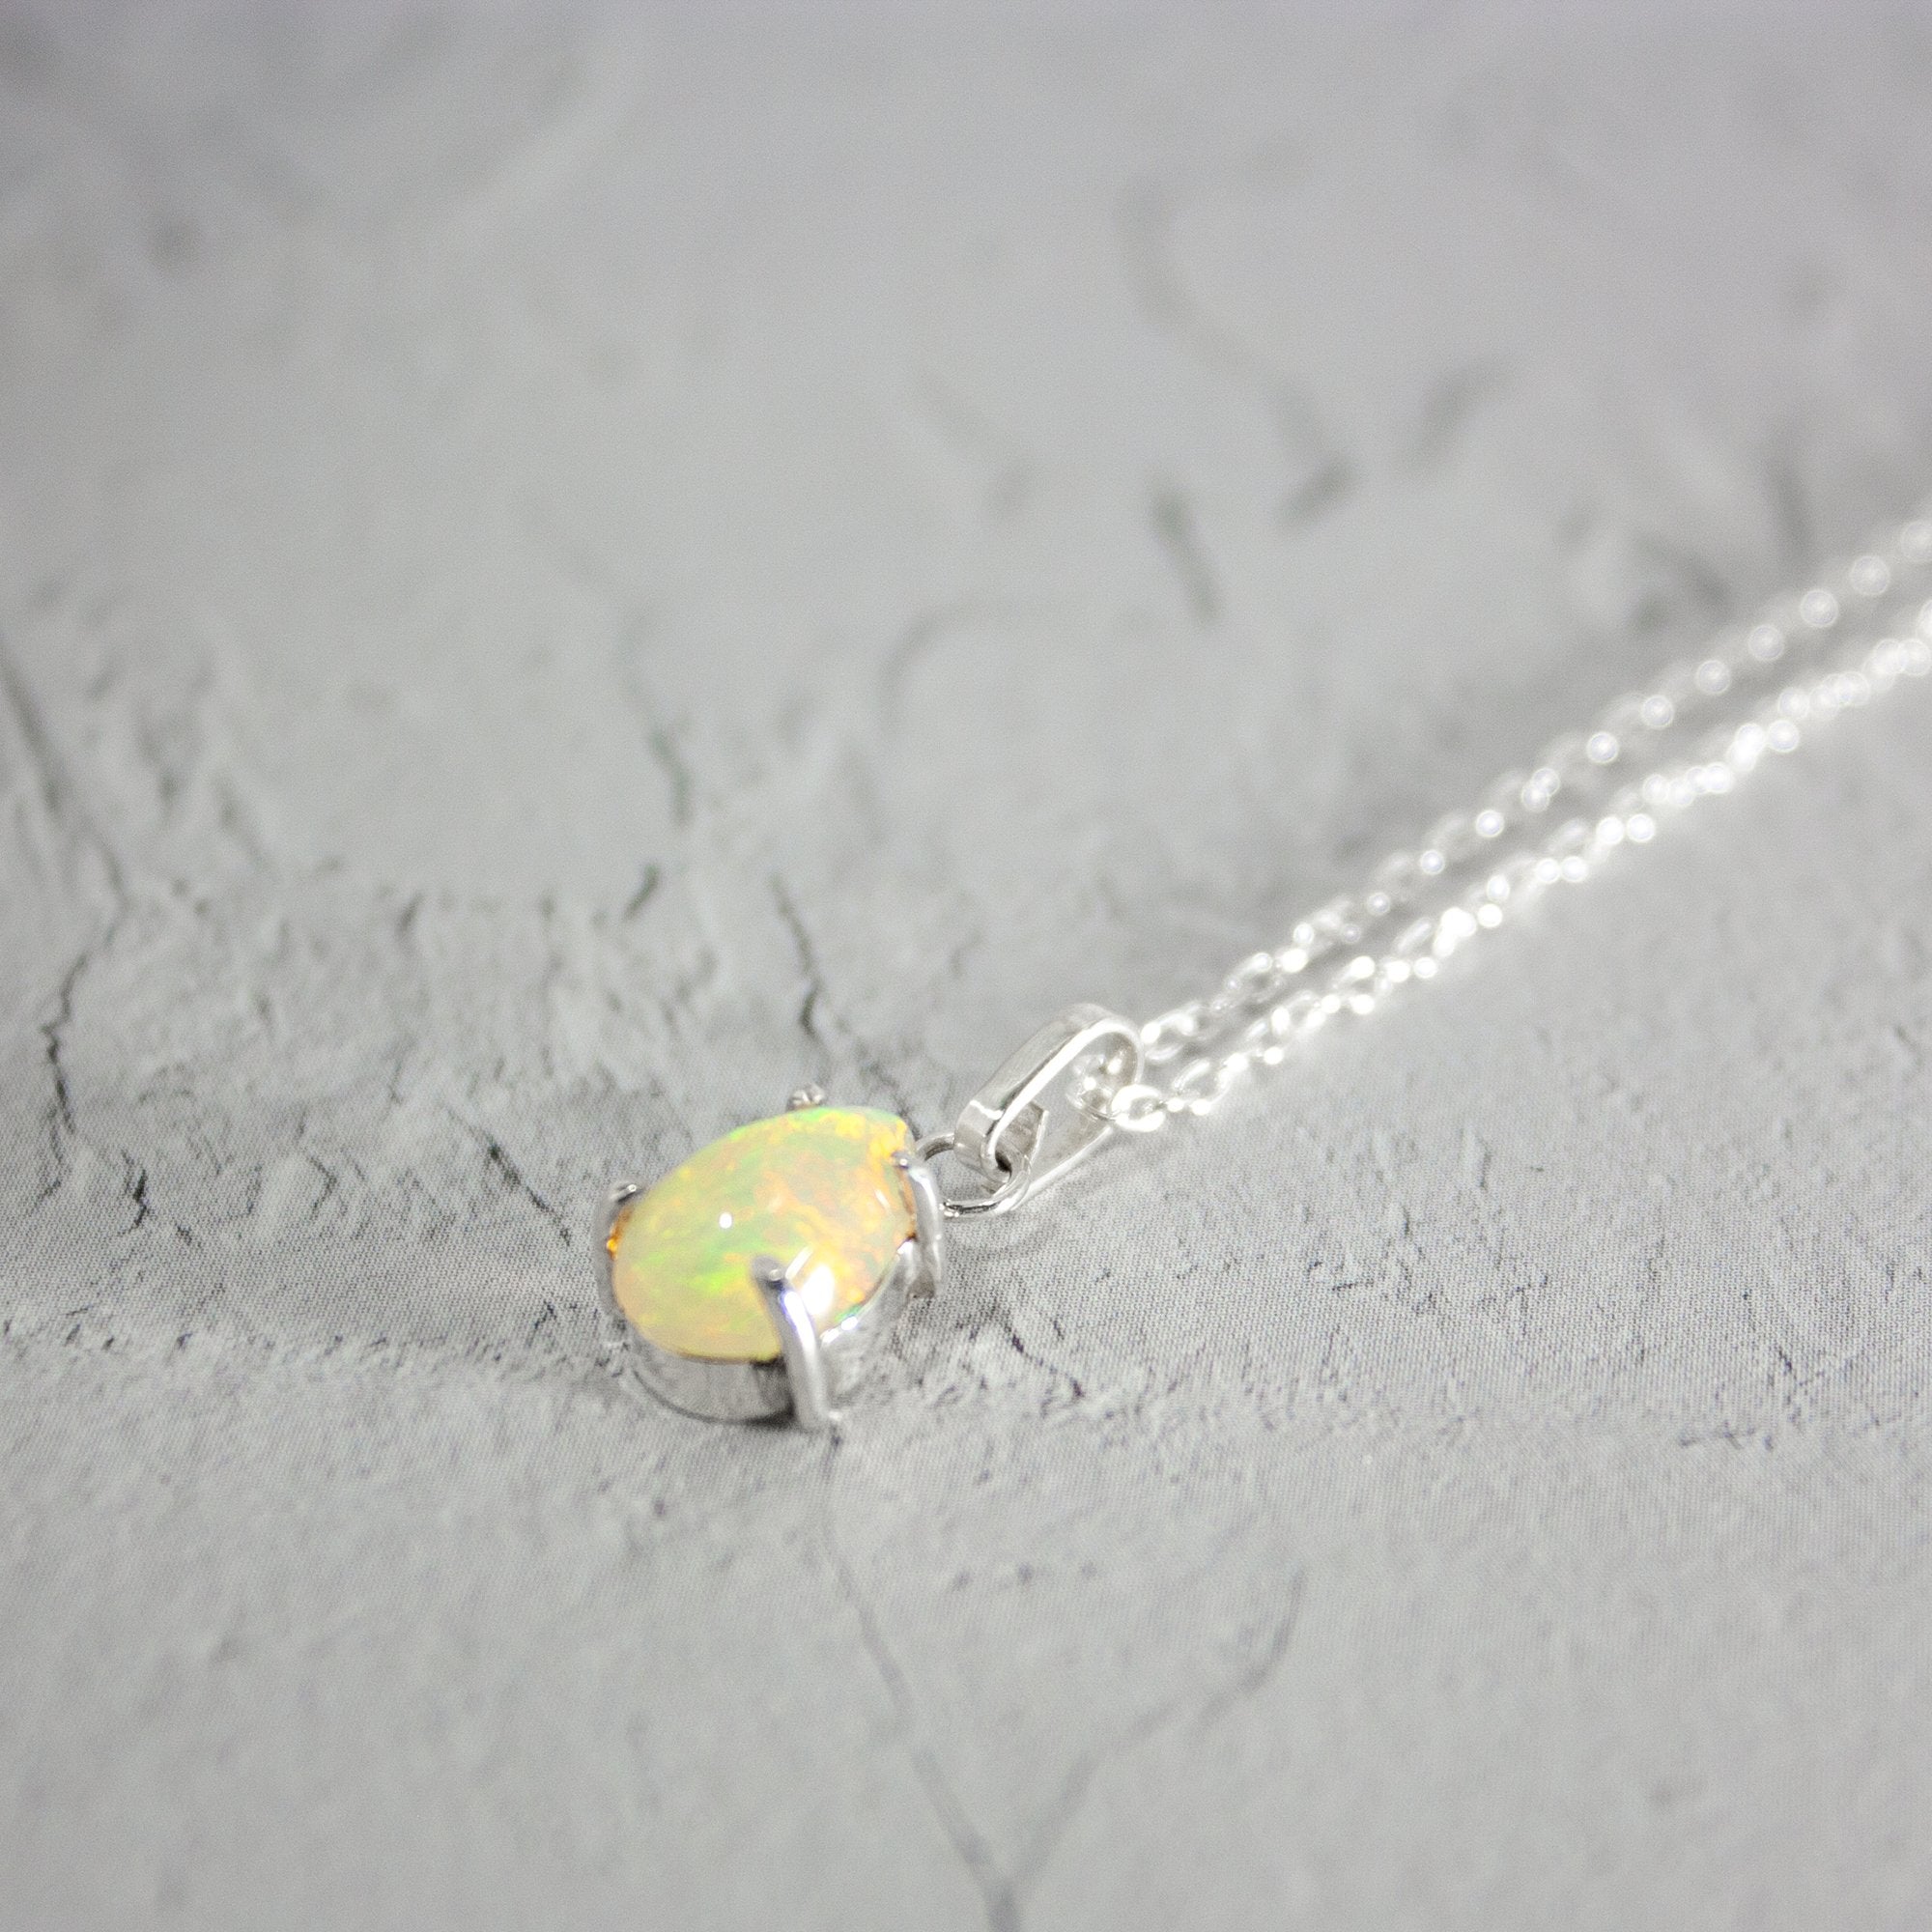 Ethereal Ethiopian Opal Pendant Necklace in Sterling Silver - 20" Length
Keywords: Ethiopian opal, pendant necklace, sterling silver, claw setting, mid length necklace, natural gemstones, mesmerizing colors. Bijou Her